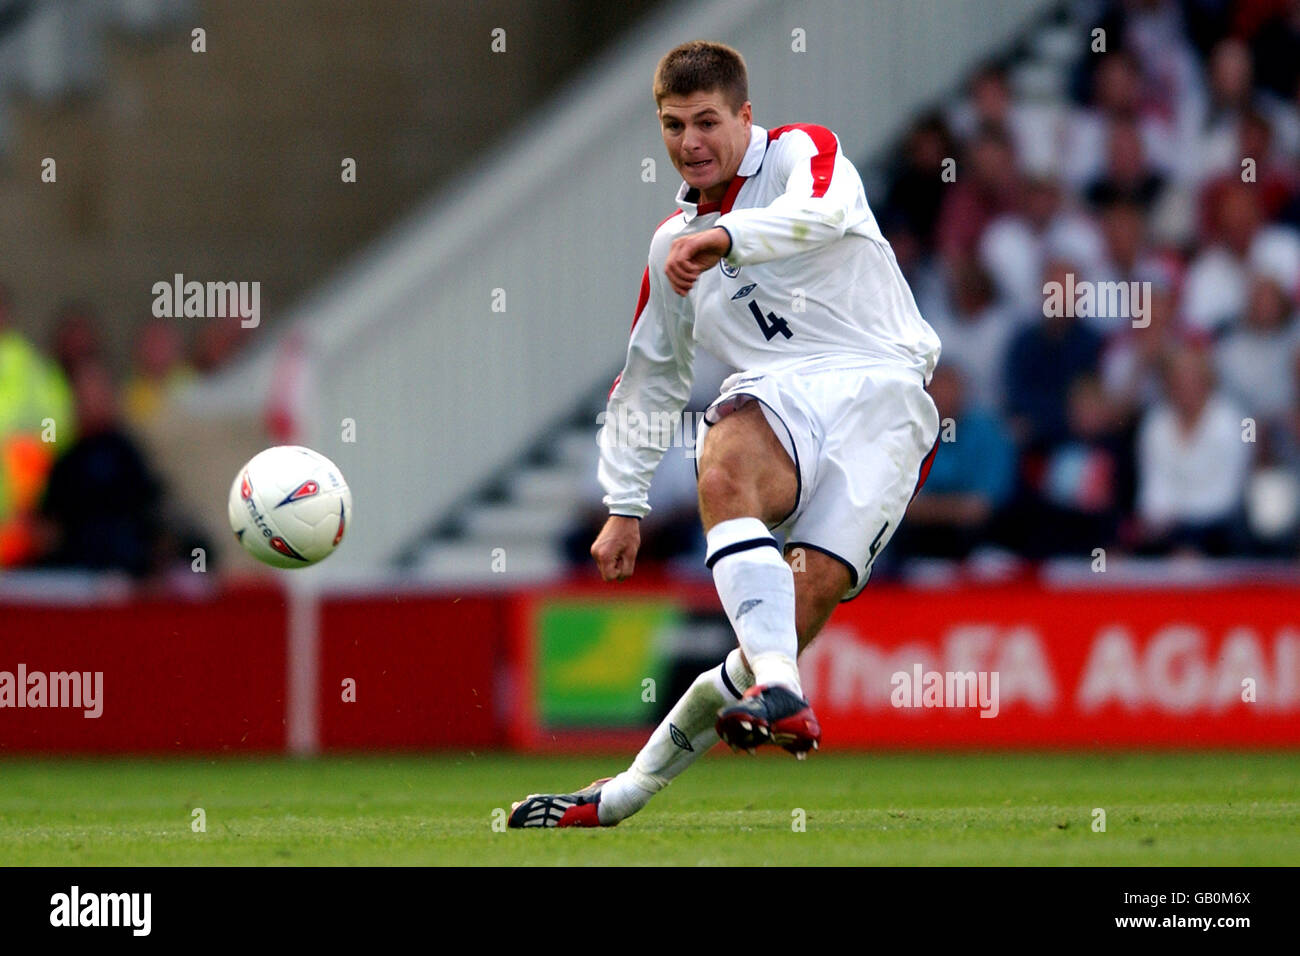 Soccer - Championnat d'Europe 2004 qualificateur - Groupe sept - Angleterre / Slovaquie. Steven Gerrard, Angleterre Banque D'Images